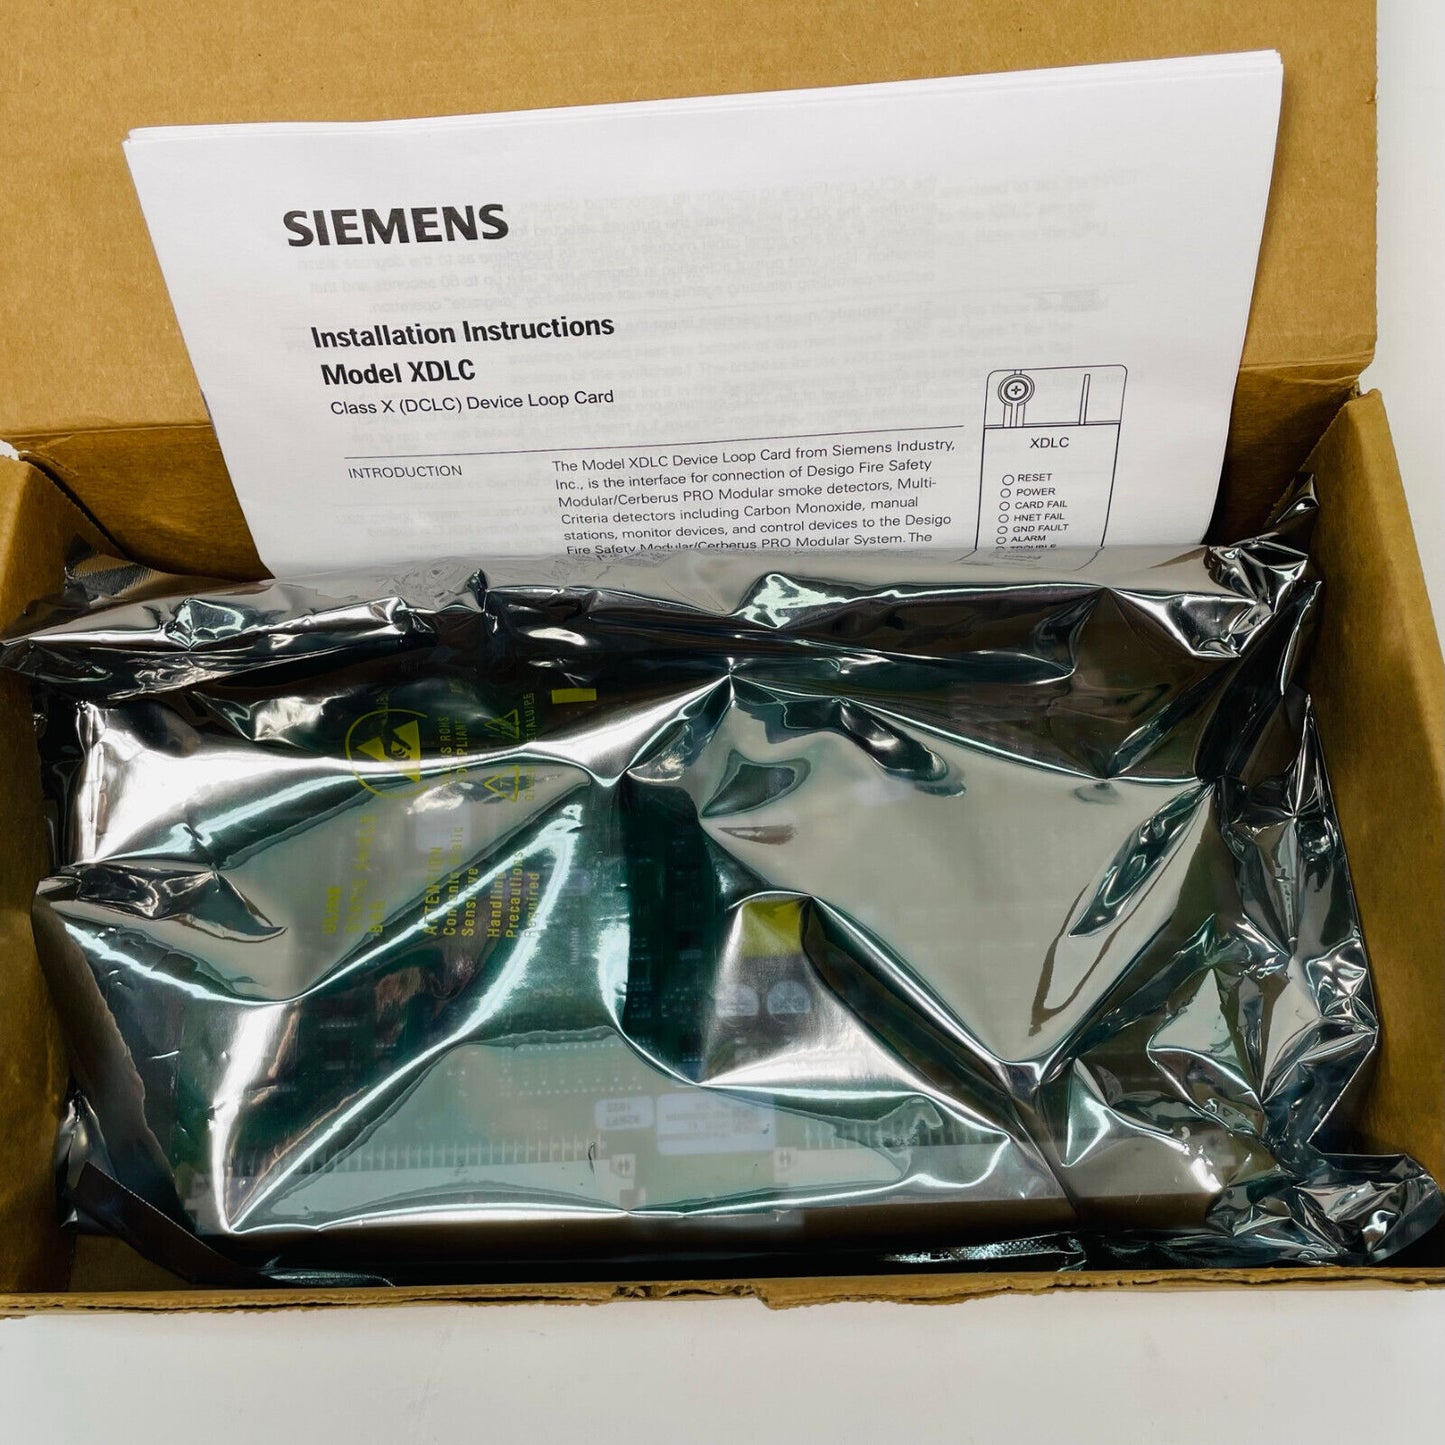 New SIEMENS XDLC S54430-B8-A1  Device Loop Card "X" Series